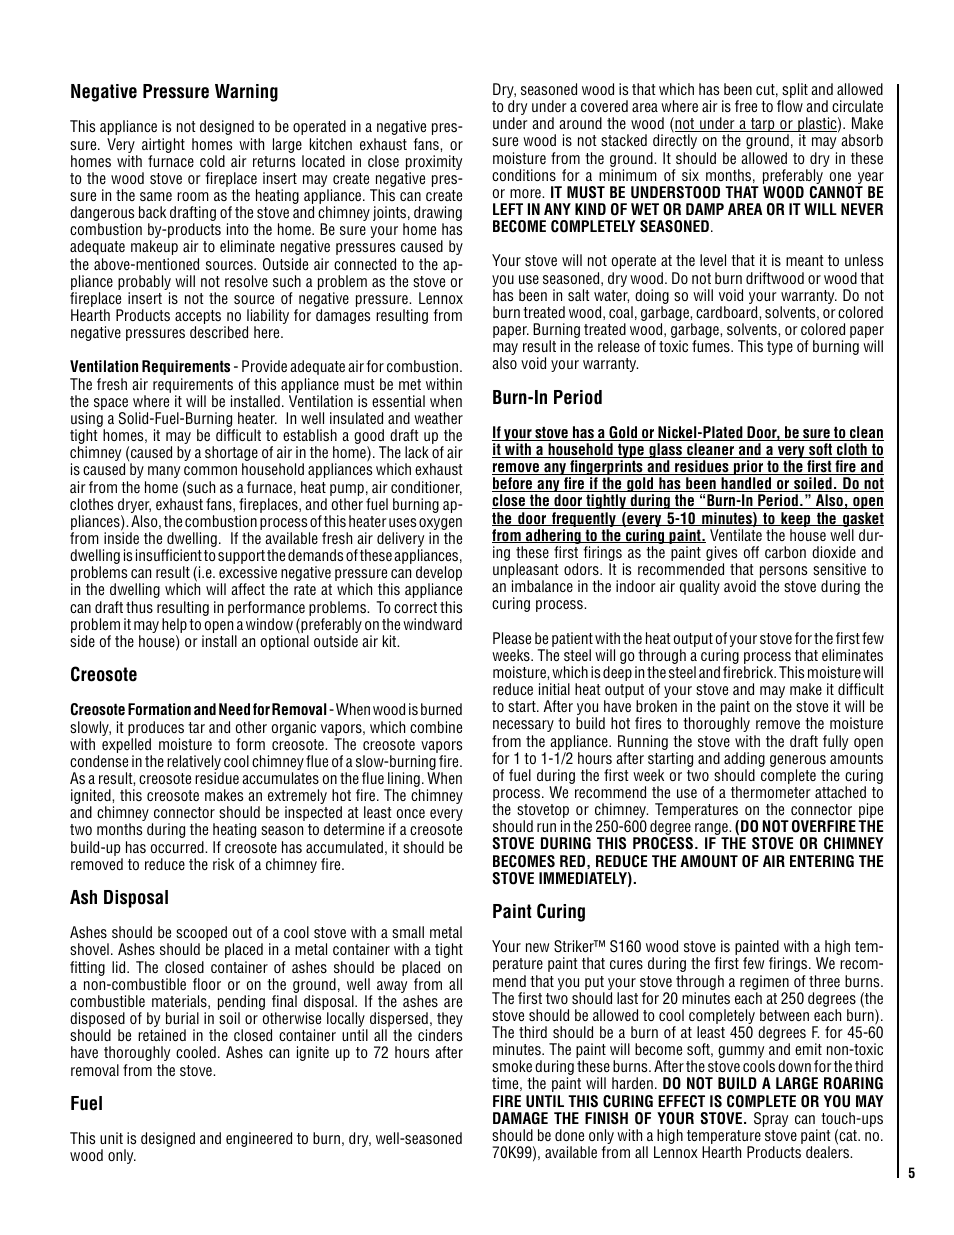 LG MODEL STRIKER S160 User Manual | Page 5 / 22